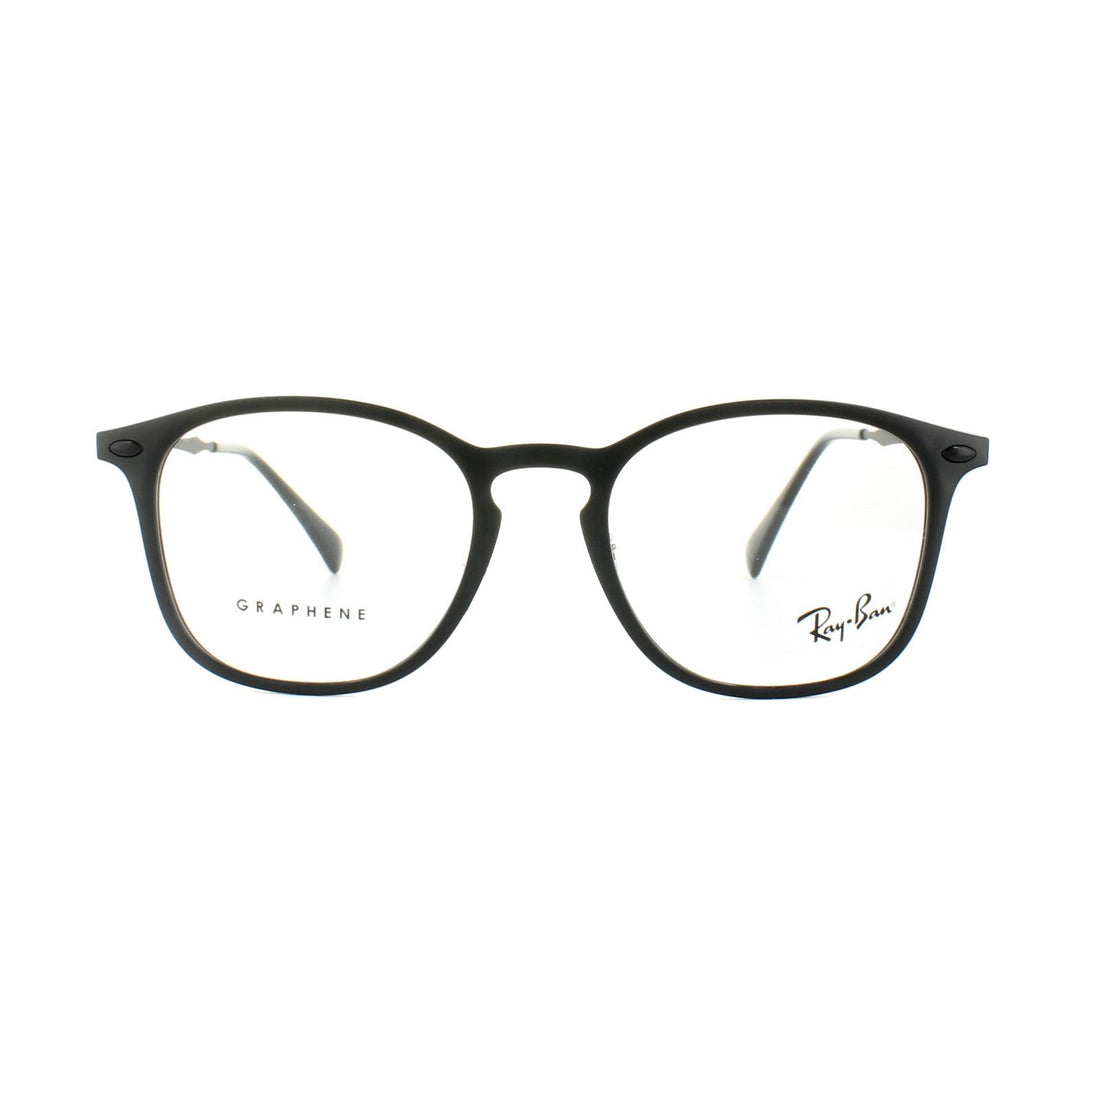 Ray-Ban RX 8954 Glasses Frames Black Graphene